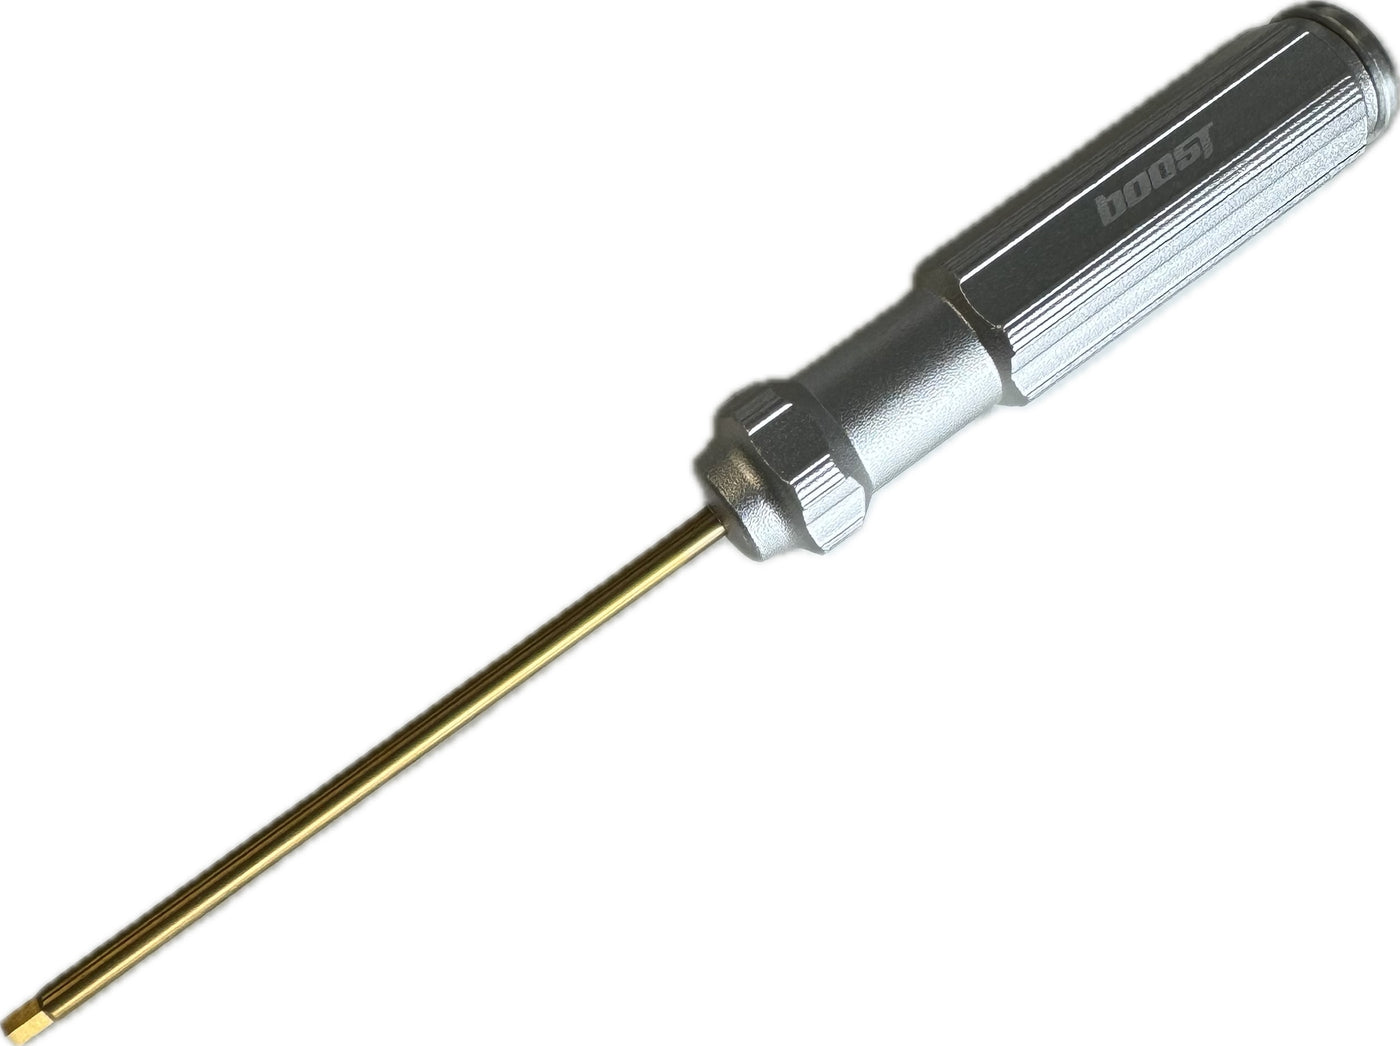 New screwdriver for Boost Fin attachment screws